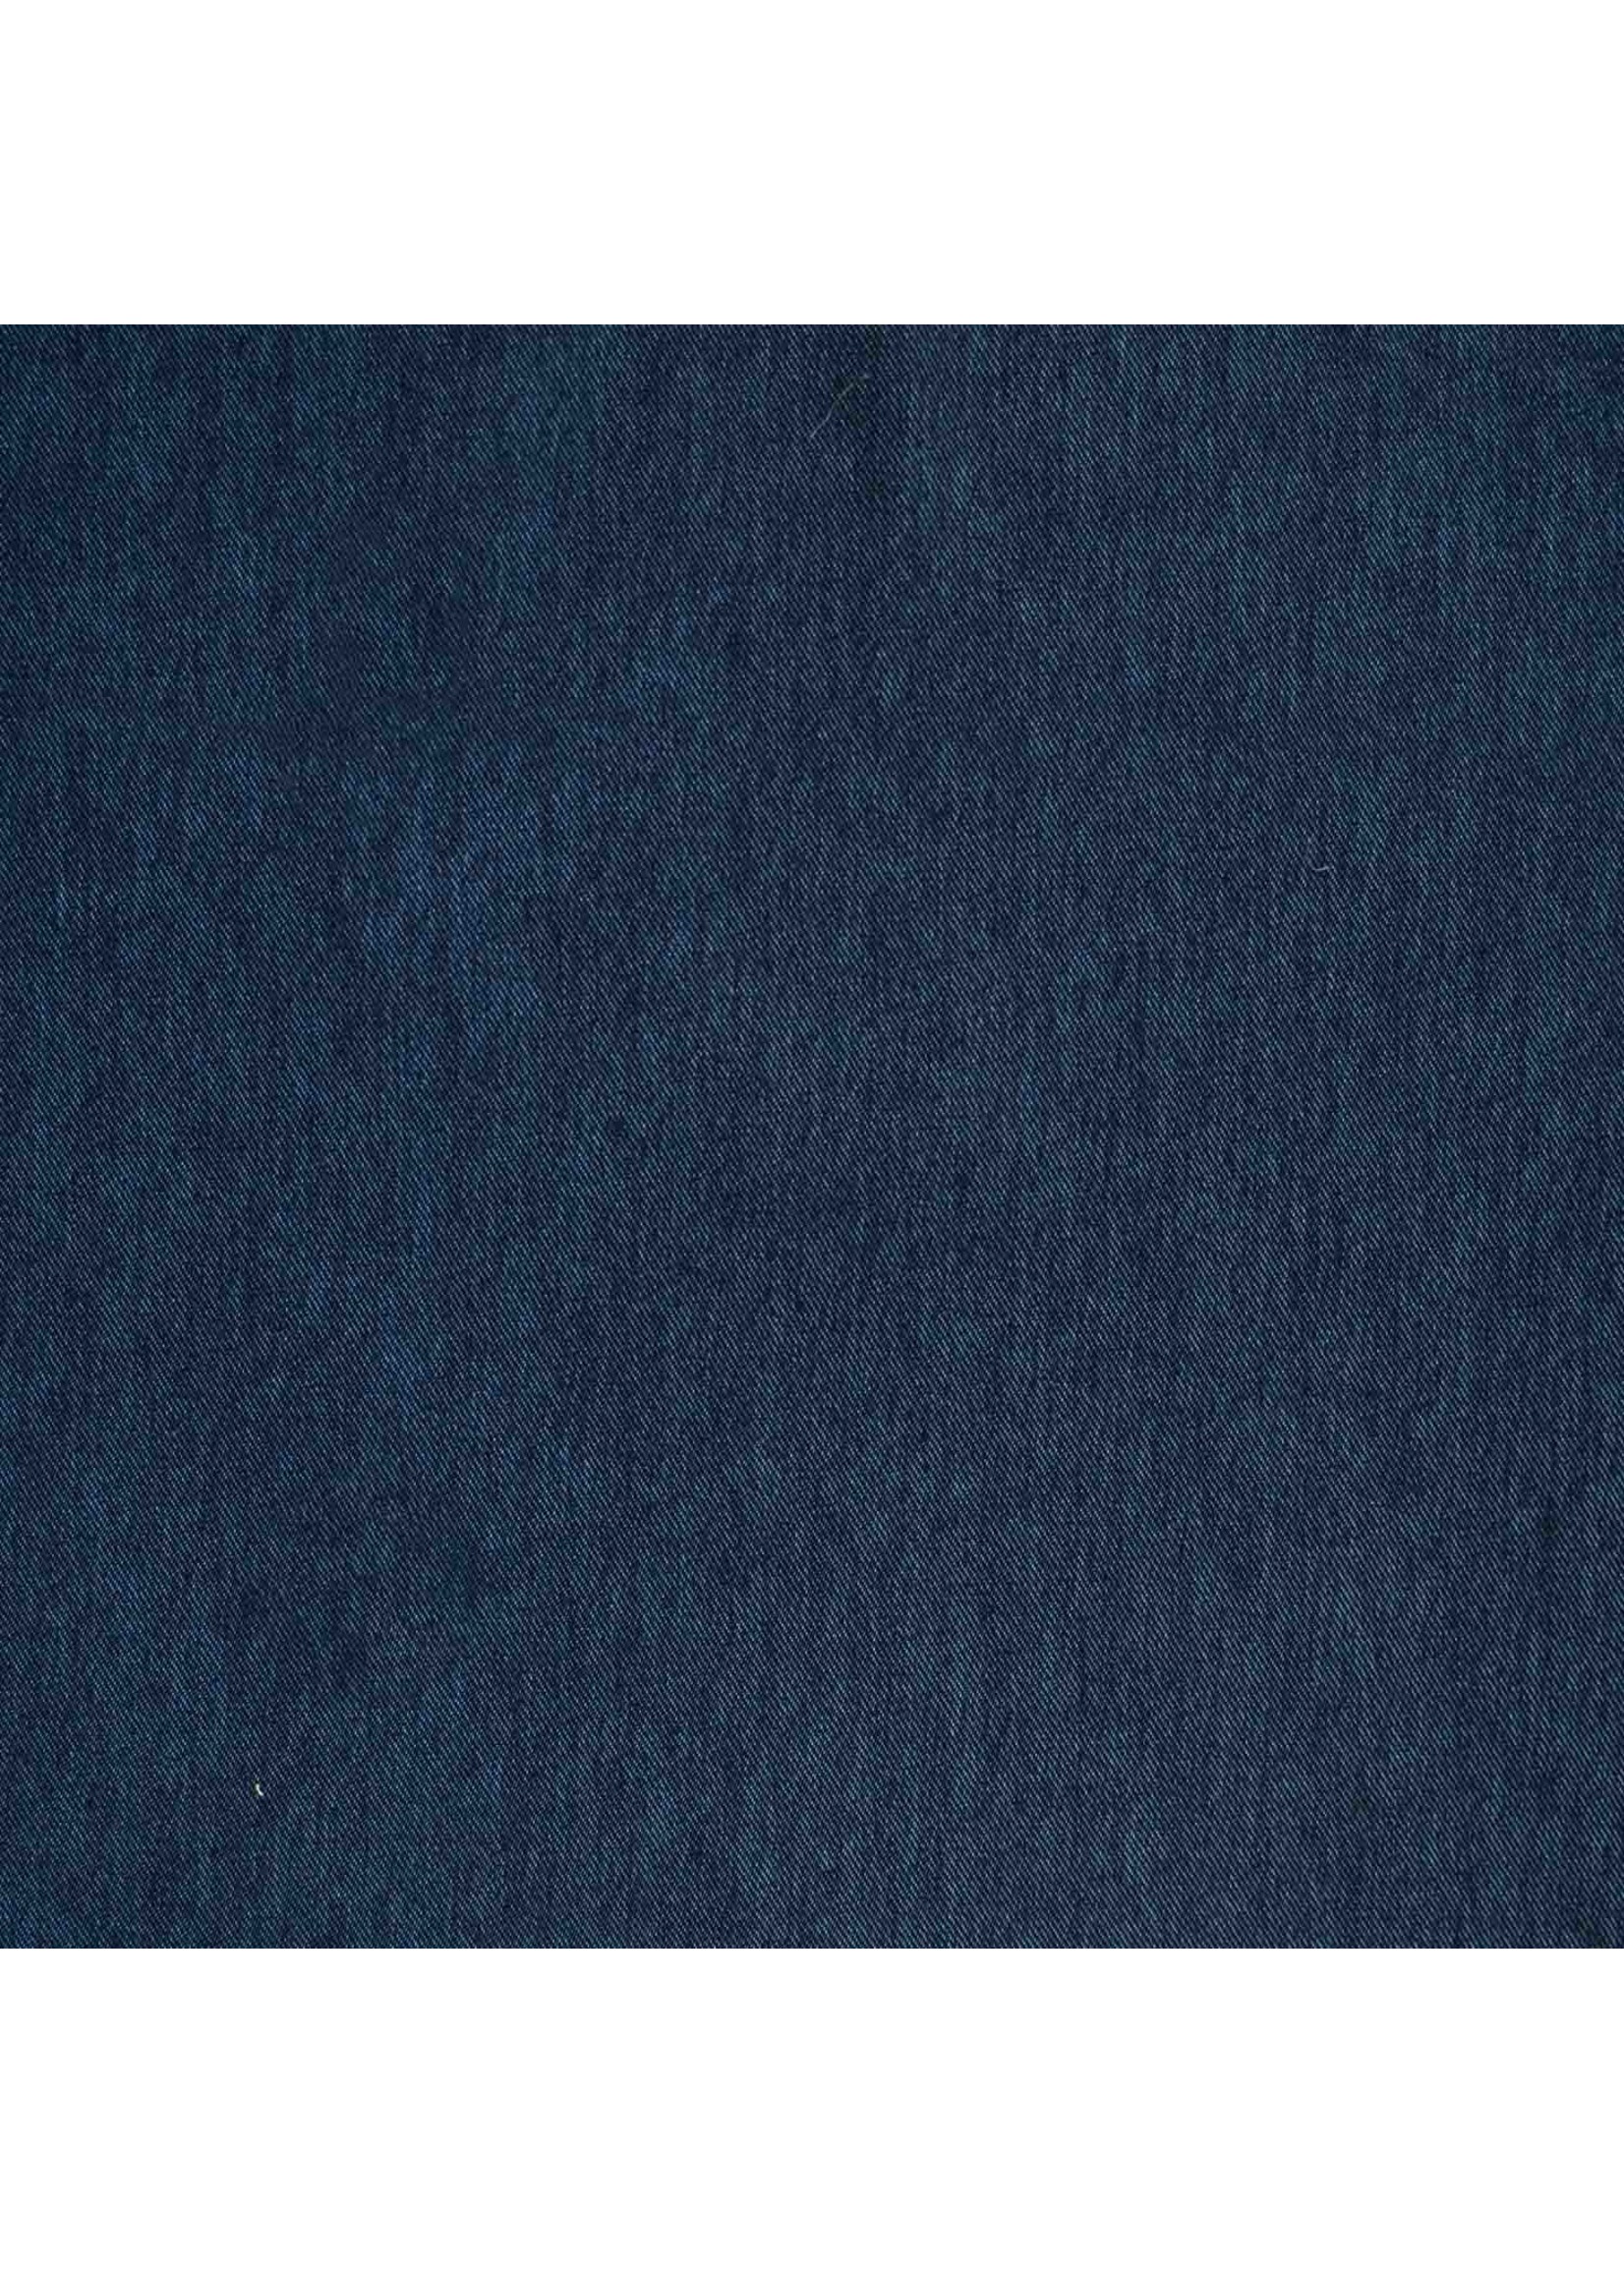 Katia Fabrics Jersey Denim - Indigo Blue